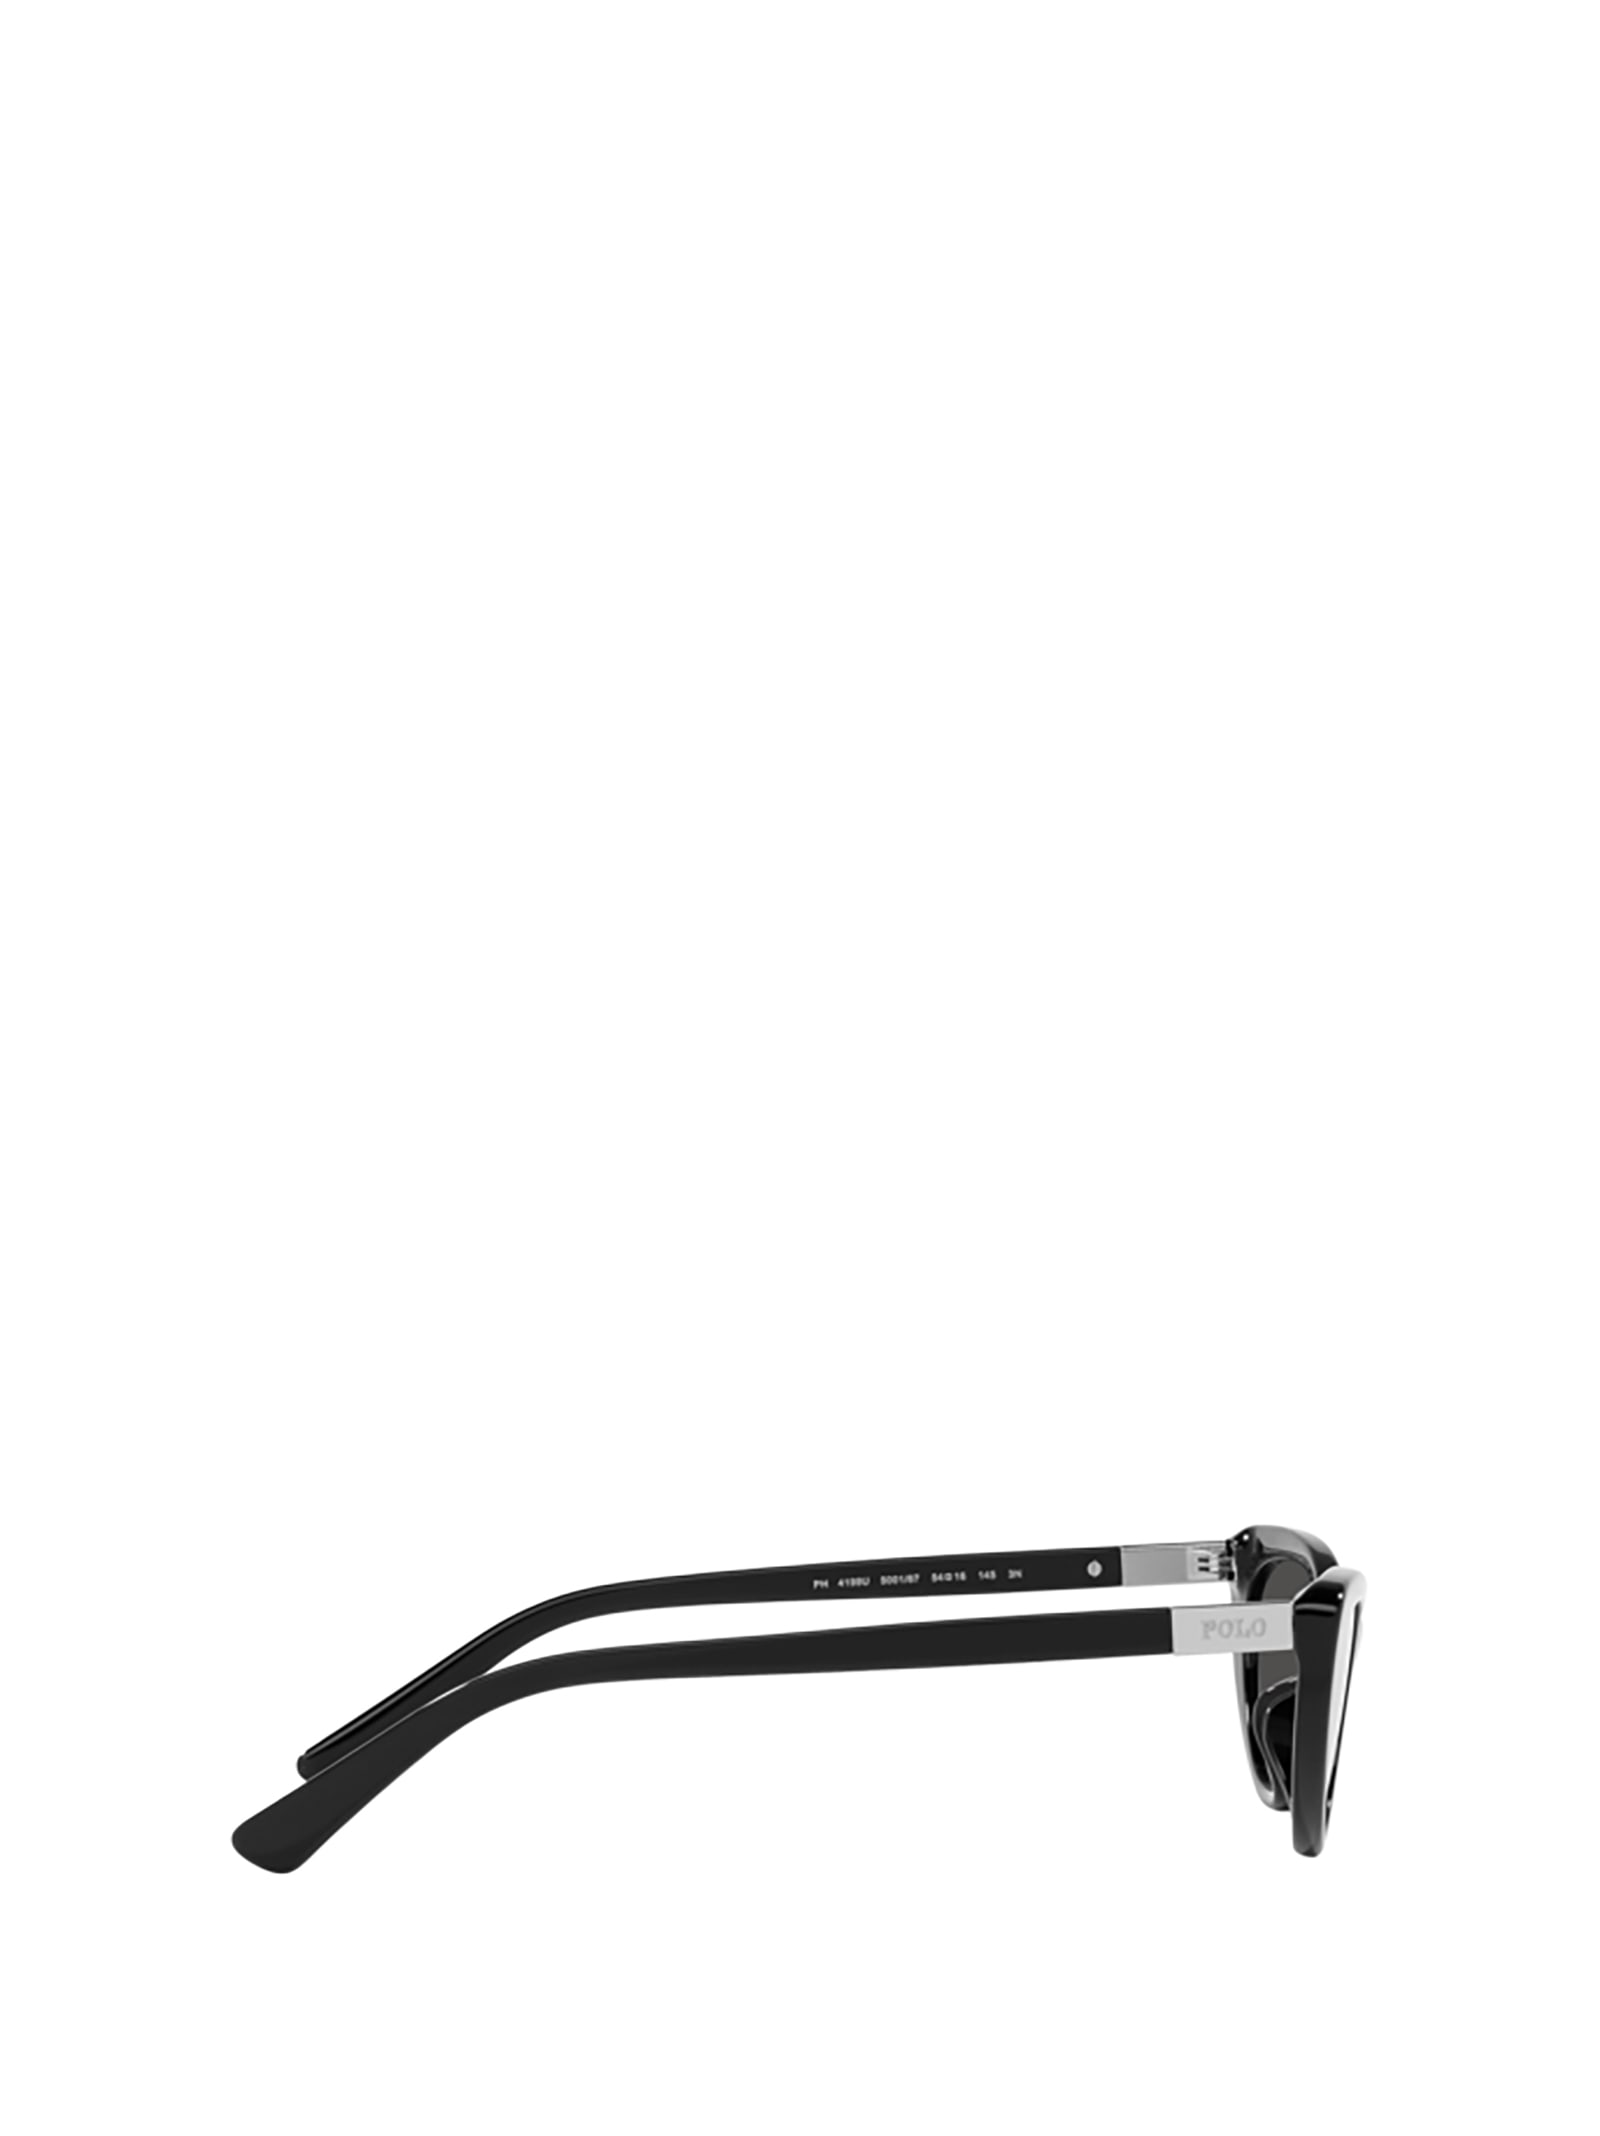 Shop Polo Ralph Lauren Ph4199u Shiny Black Sunglasses